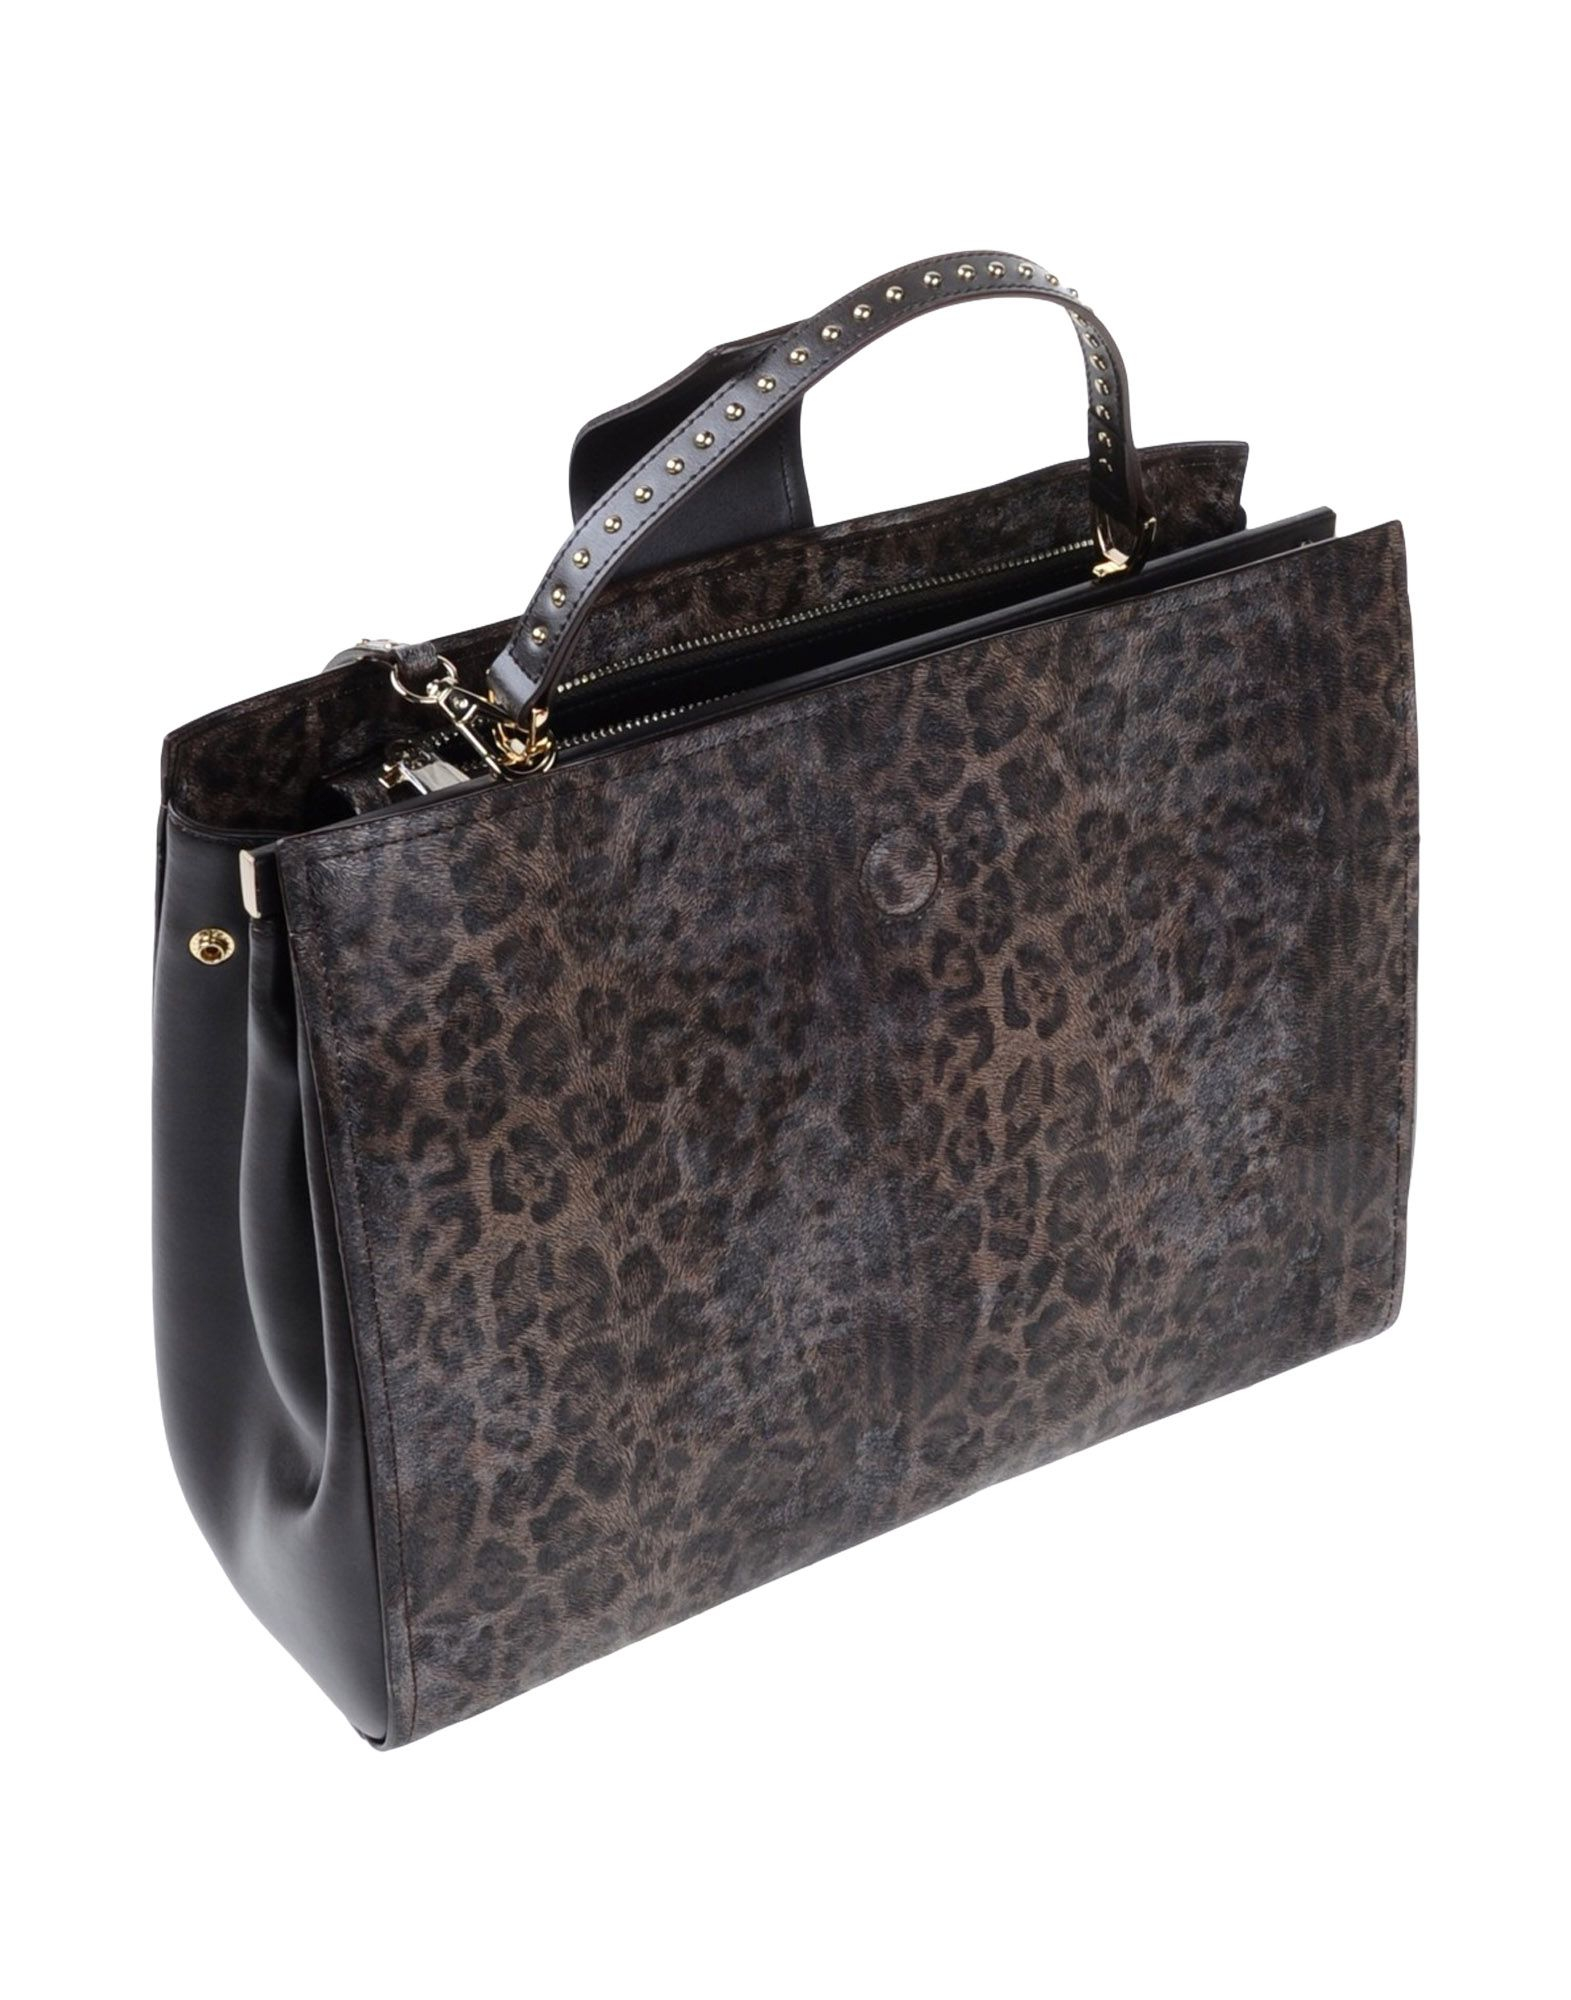 Class Roberto Cavalli Leather Handbag in Brown - Lyst